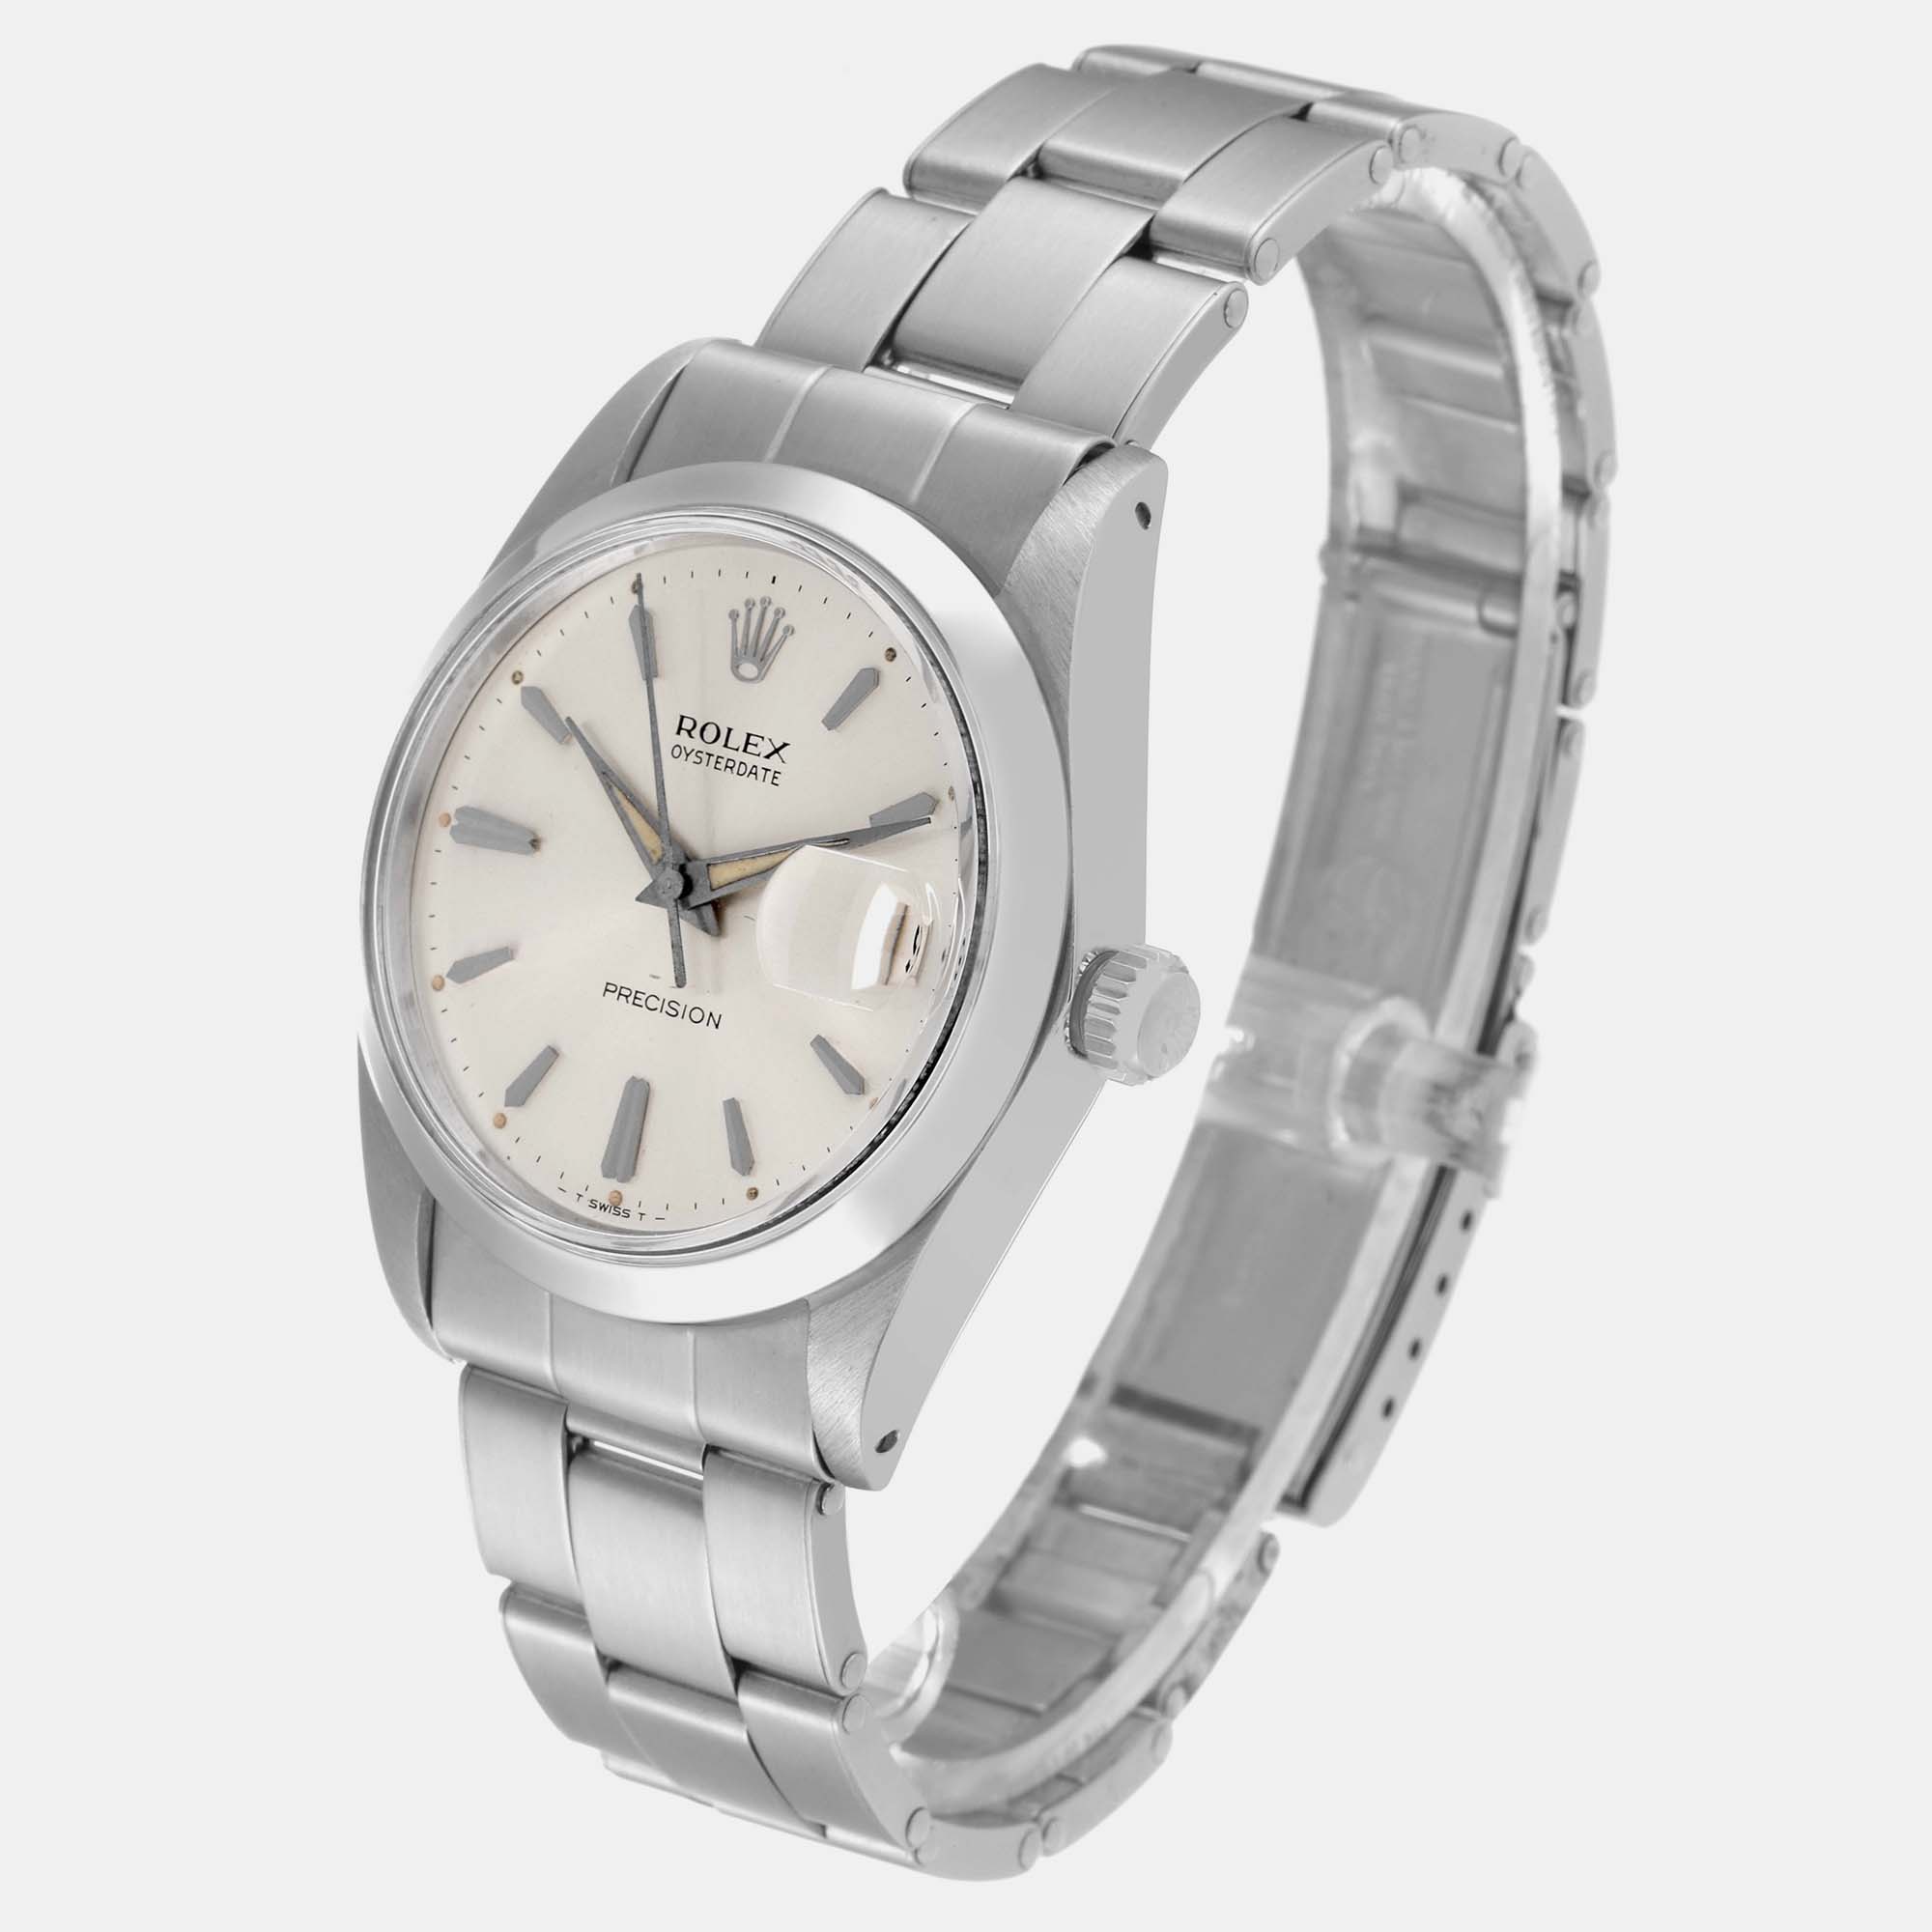 Rolex OysterDate Precision Silver Dial Steel Vintage Men's Watch 6694 35 Mm